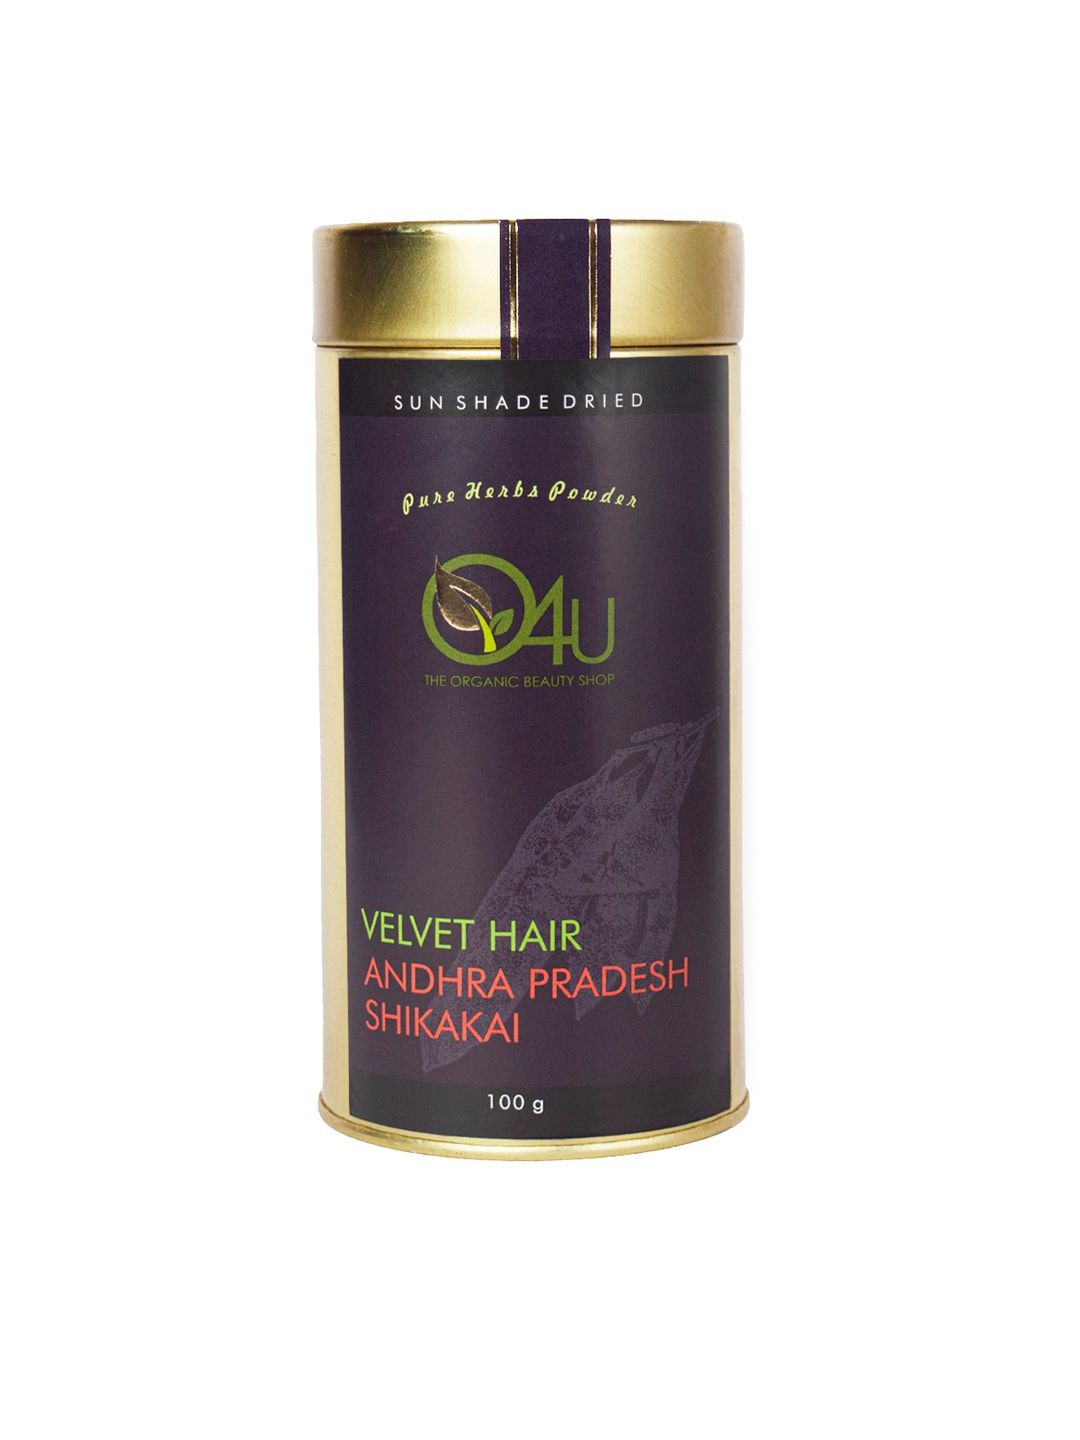 O4U Velvet Hair Andhra Pradesh Shikakai Powder- 100 g Price in India